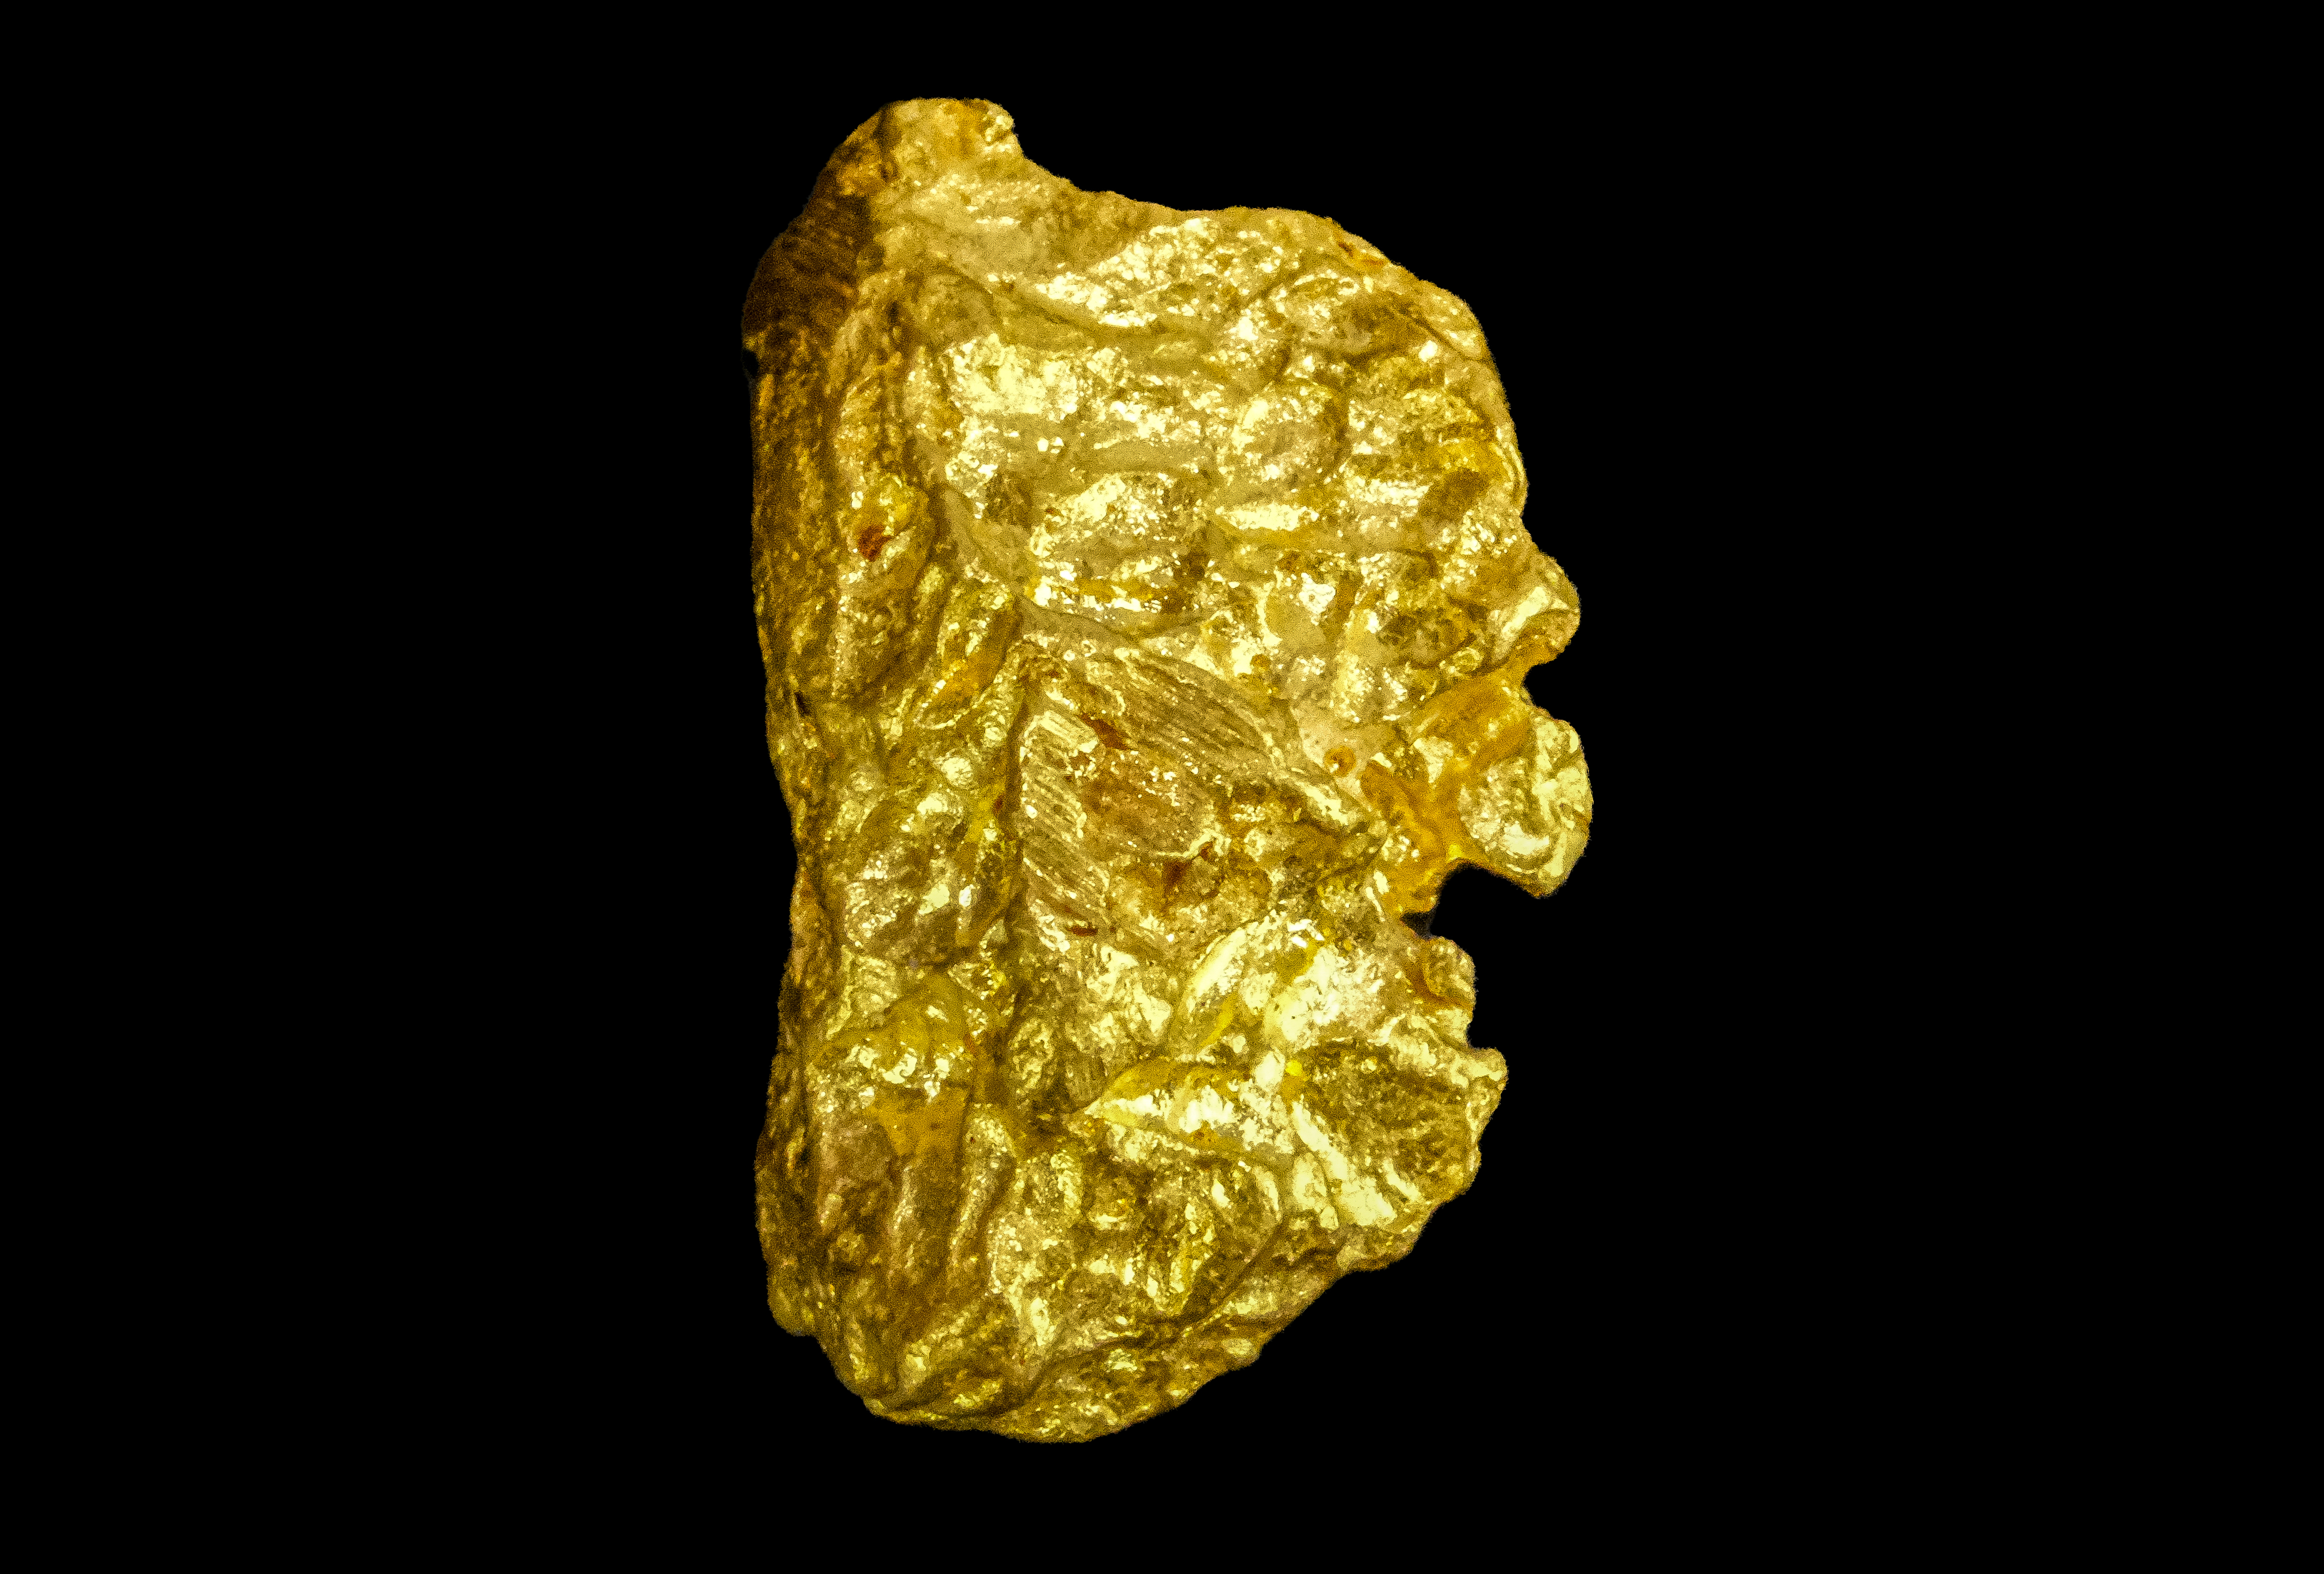 Golden nugget 6.96 g